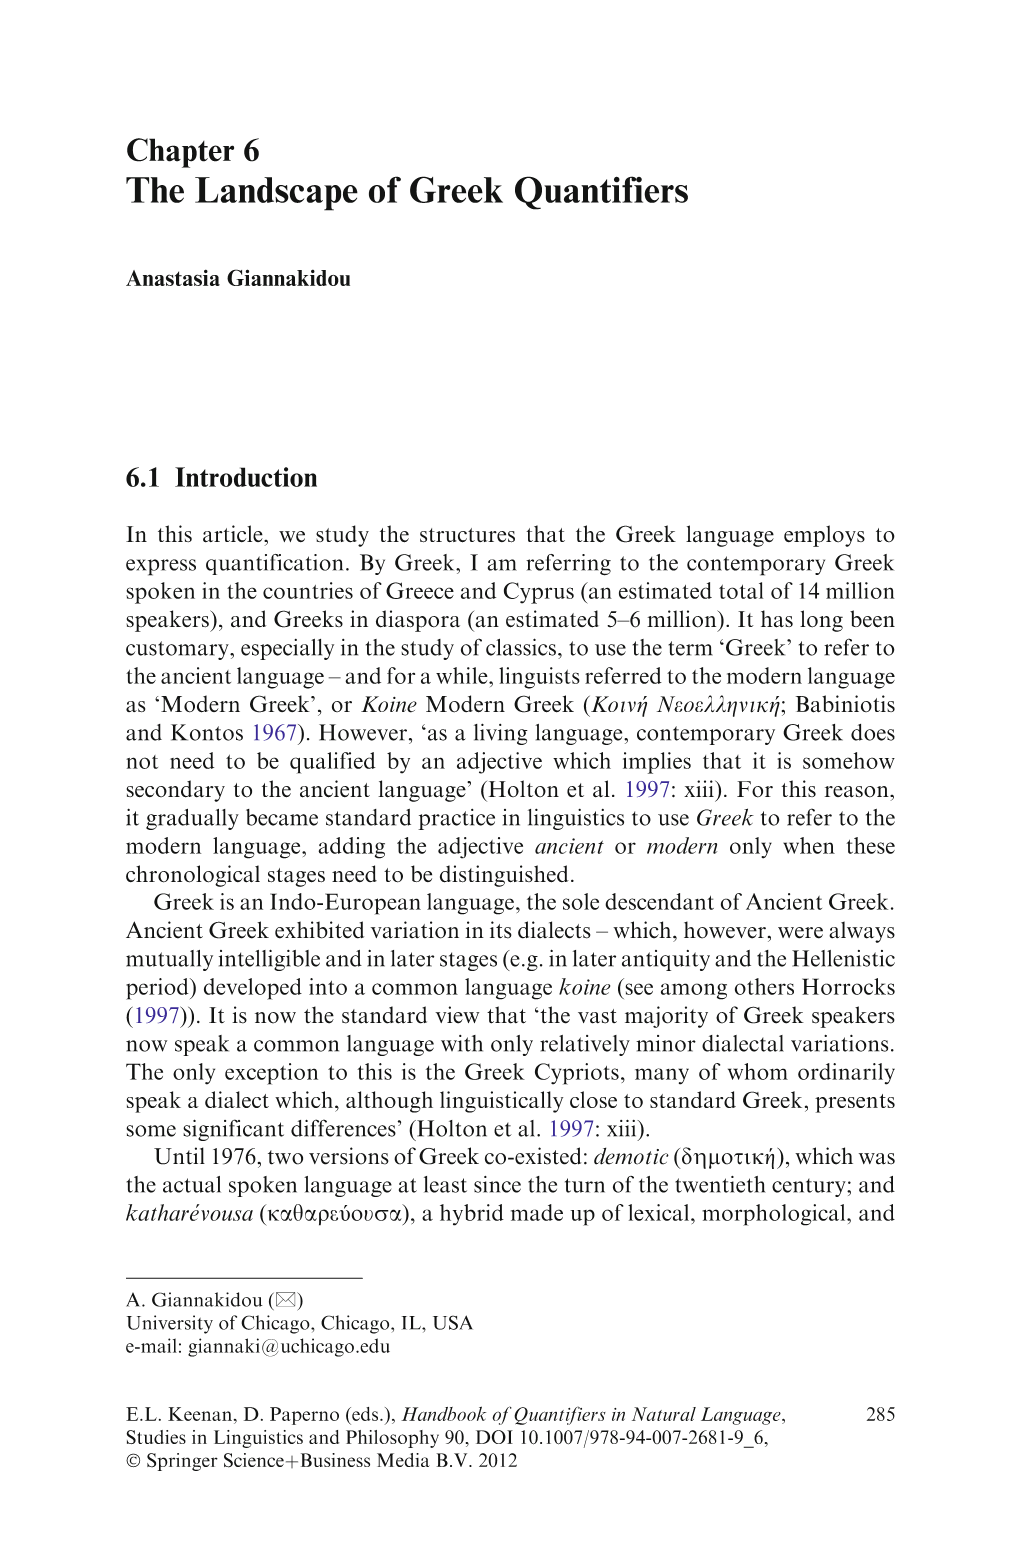 Giannakidou, A. 2012. the Landscape of Greek Quantifiers